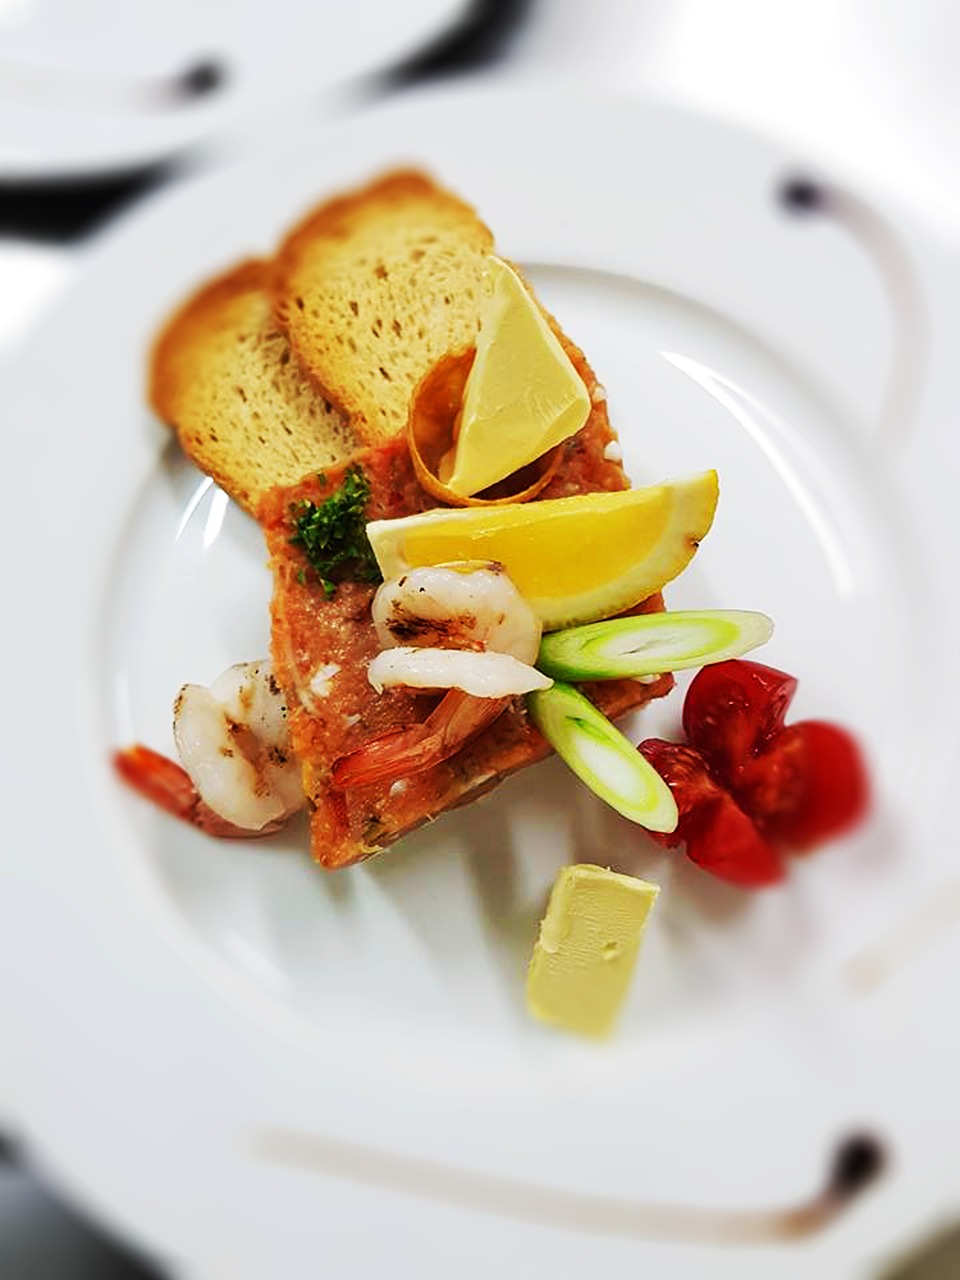 shrimp food plating free photo